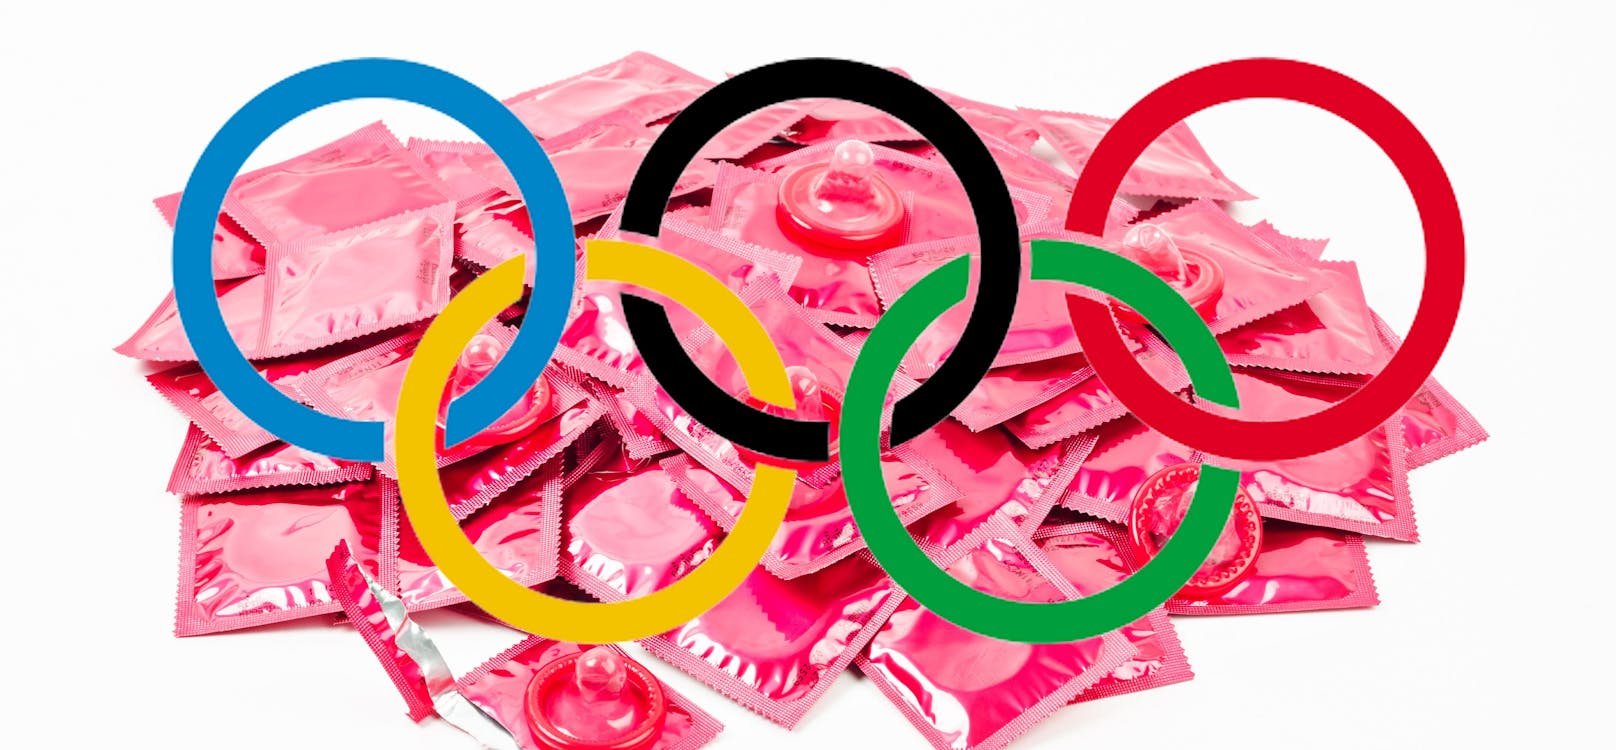 Olympia-Athleten bekommen Kondome erst bei Abreise